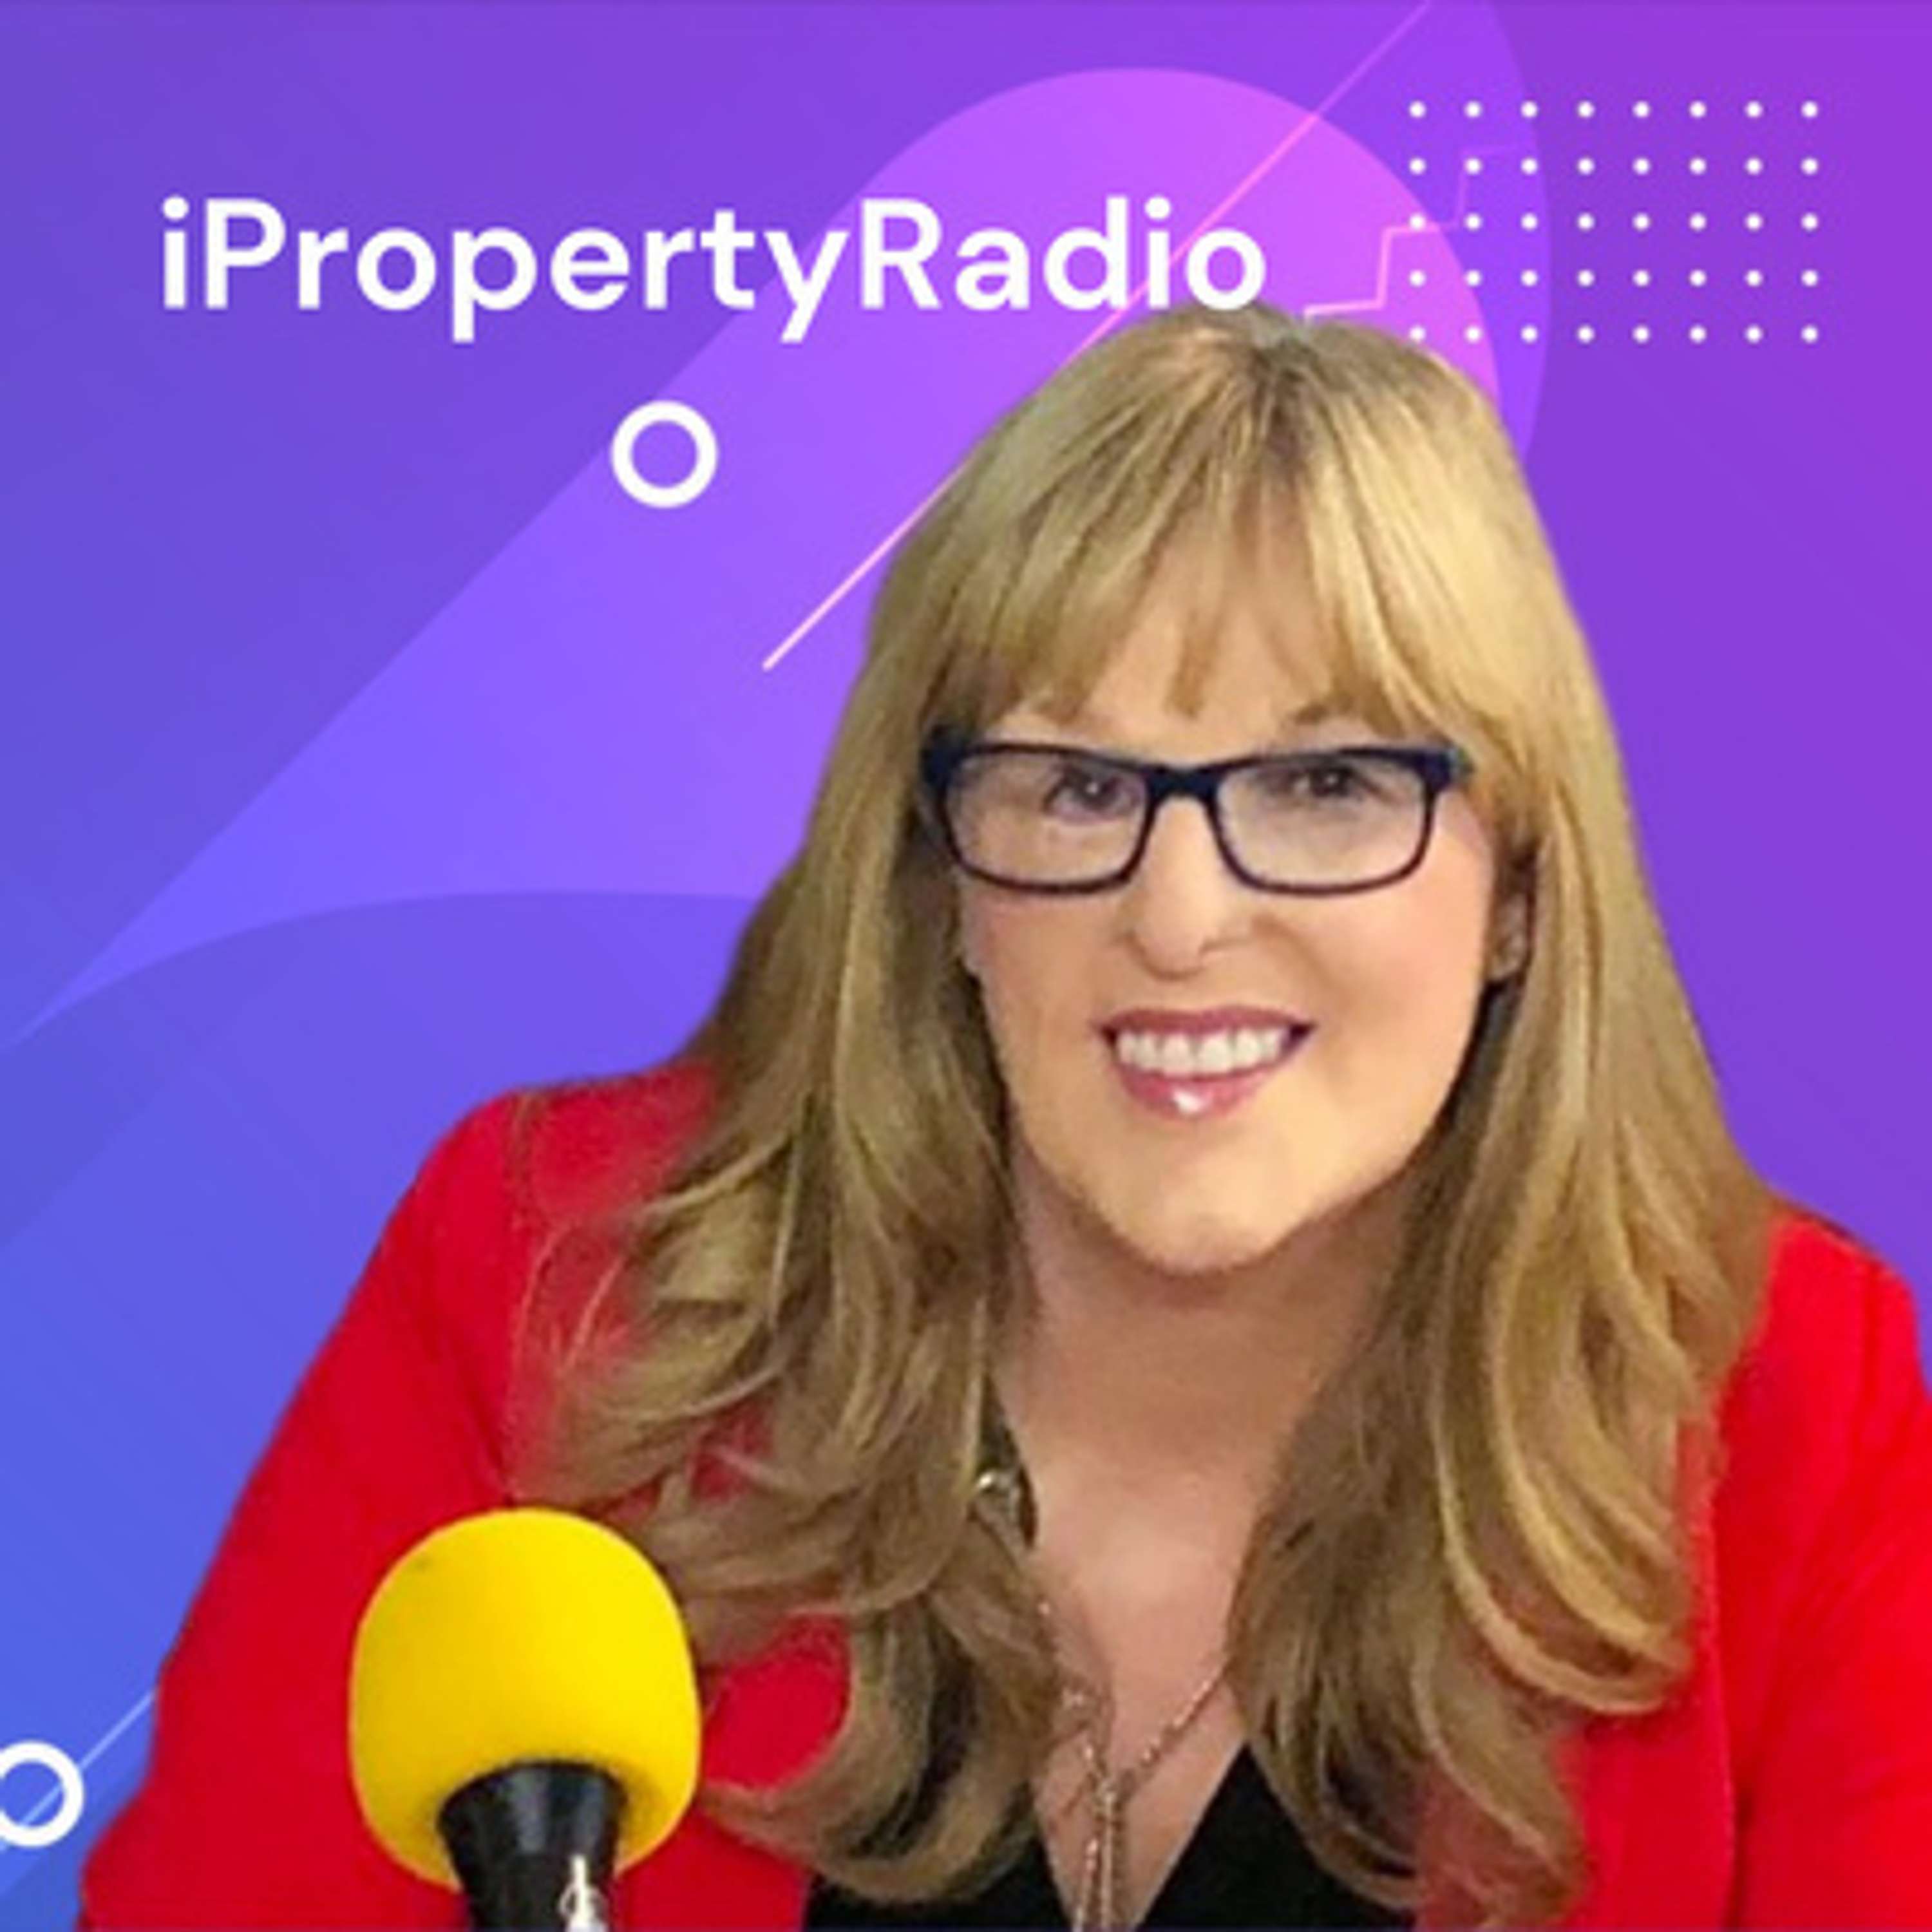 Ep.13 iPropertyRadio: Property Matters, April 16th 2019